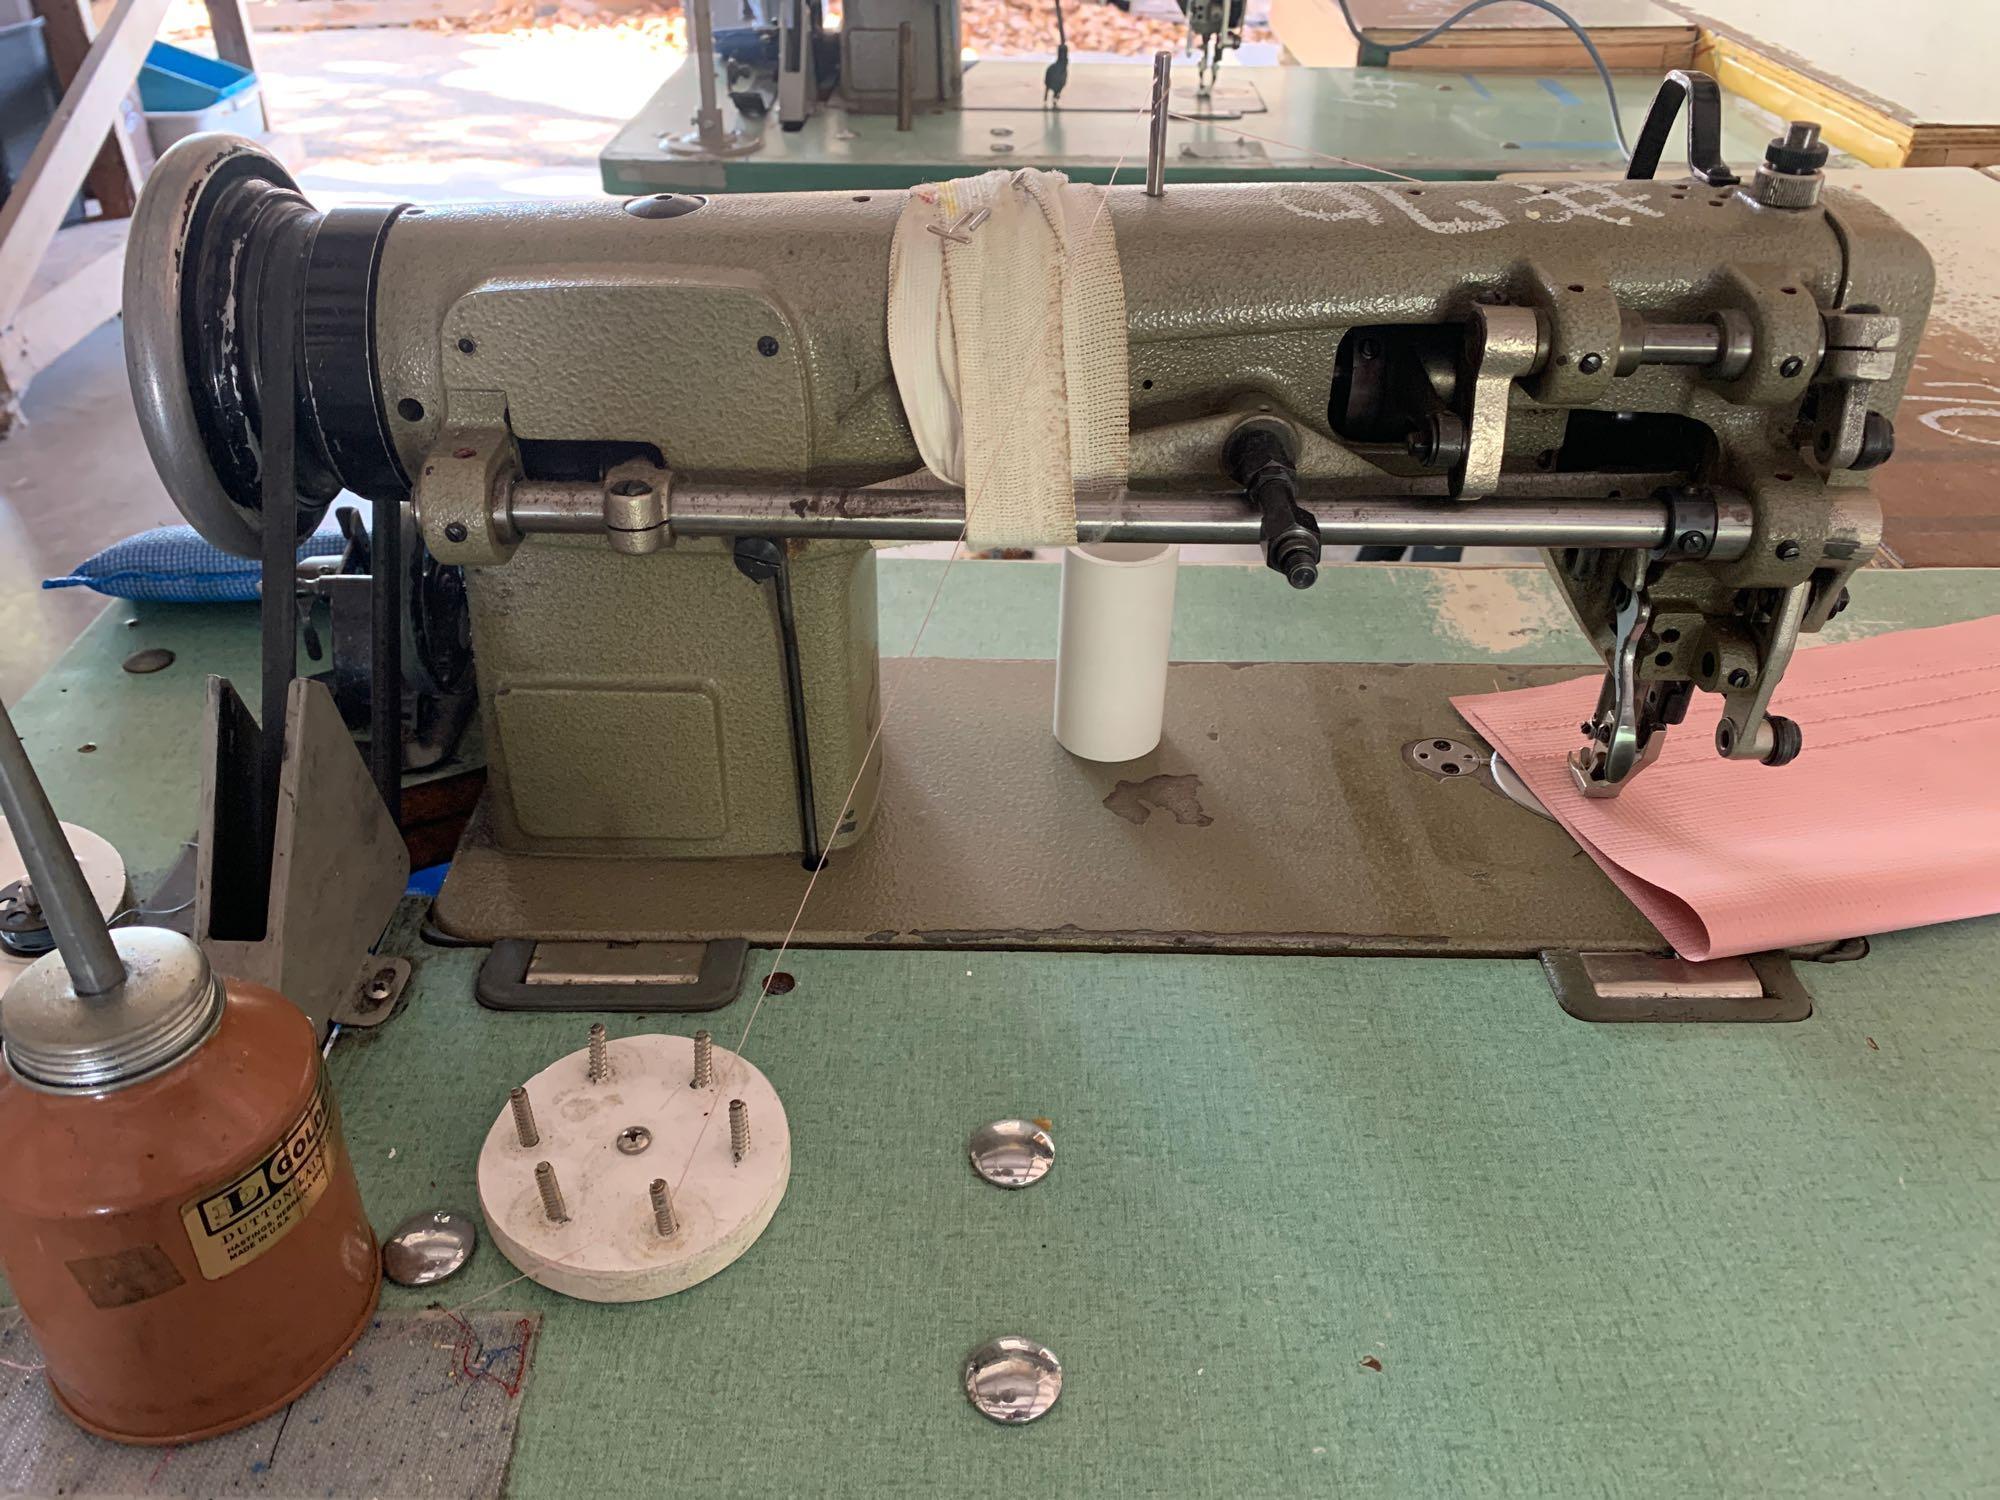 Industrial Brothers Sewing Machine, DB2-B797, Srl #777063